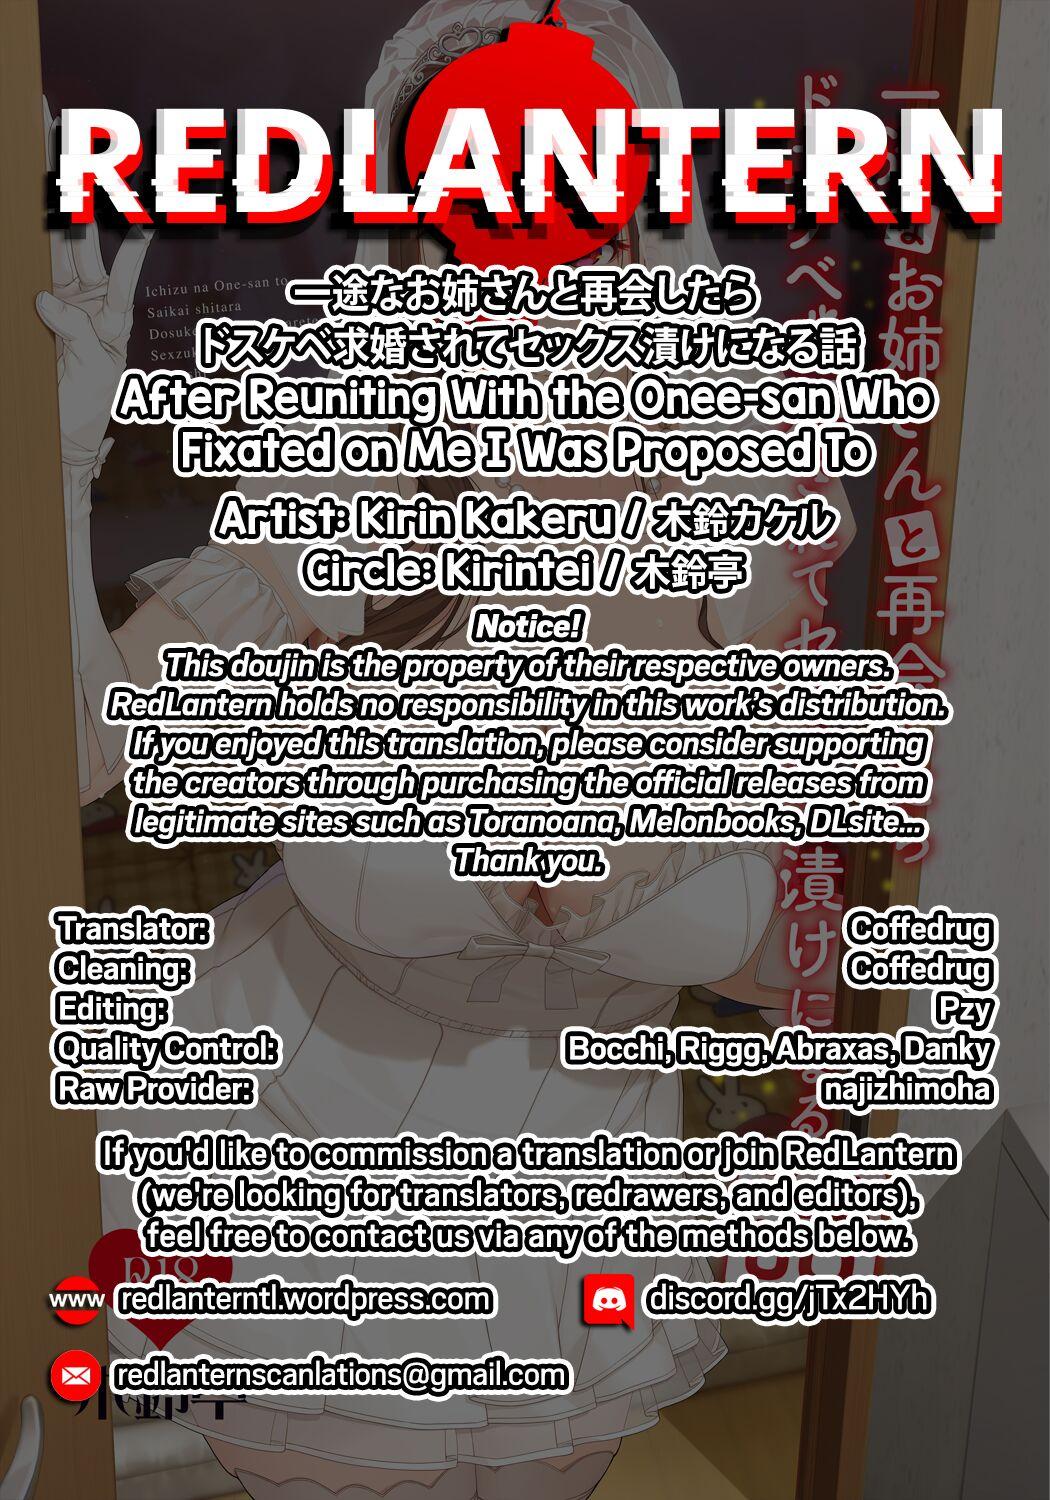 [Kirintei (Kirin Kakeru)] Ichizu na Onee-san to Saikaishitara Dosukebe Kyuukonsarete Sex Tsukeninaru Hanashi | After Reuniting with the Onee-san Who is Fixated on Me, I was Proposed to with Sex and Got Addicted [English] [Coffedrug+RedLantern] [Digital] 29